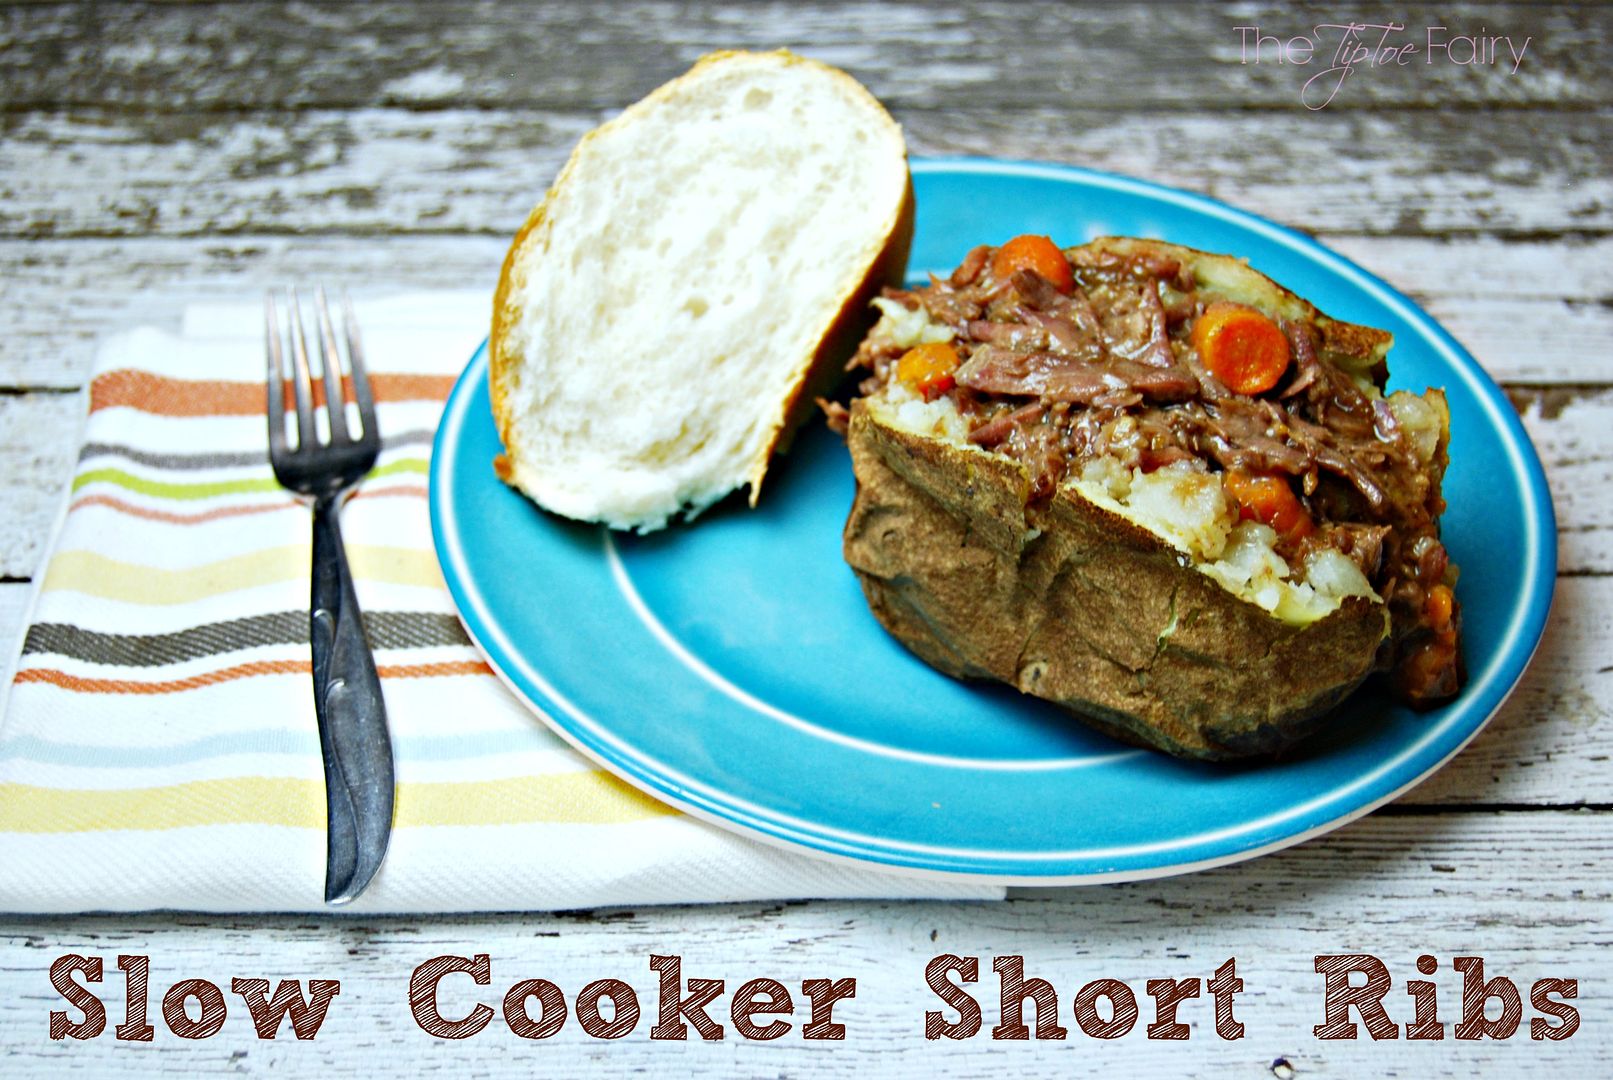 Slow Cooker Short Ribs Over Baked Potatoes | The TipToe Fairy #Labels4Edu  #shop #slowcookerecipes #beefrecipes